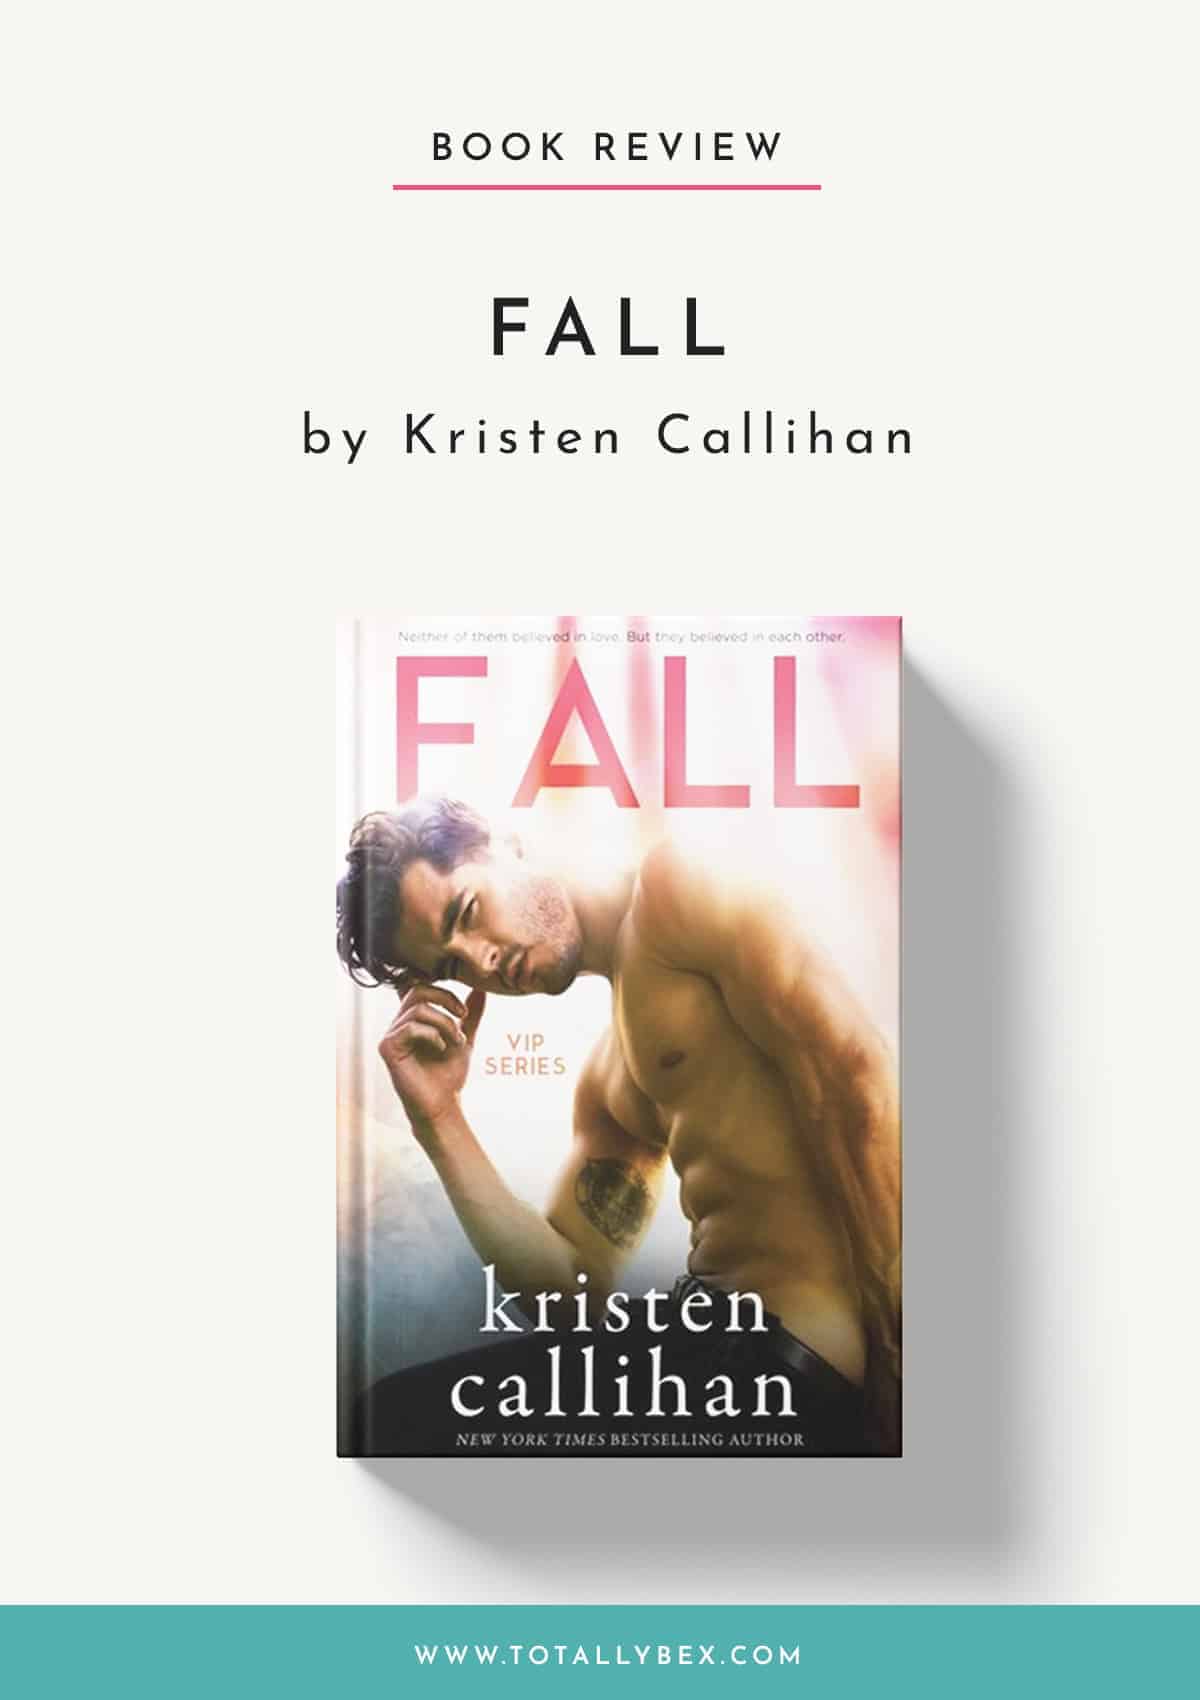 Fall by Kristen Callihan-Book Review